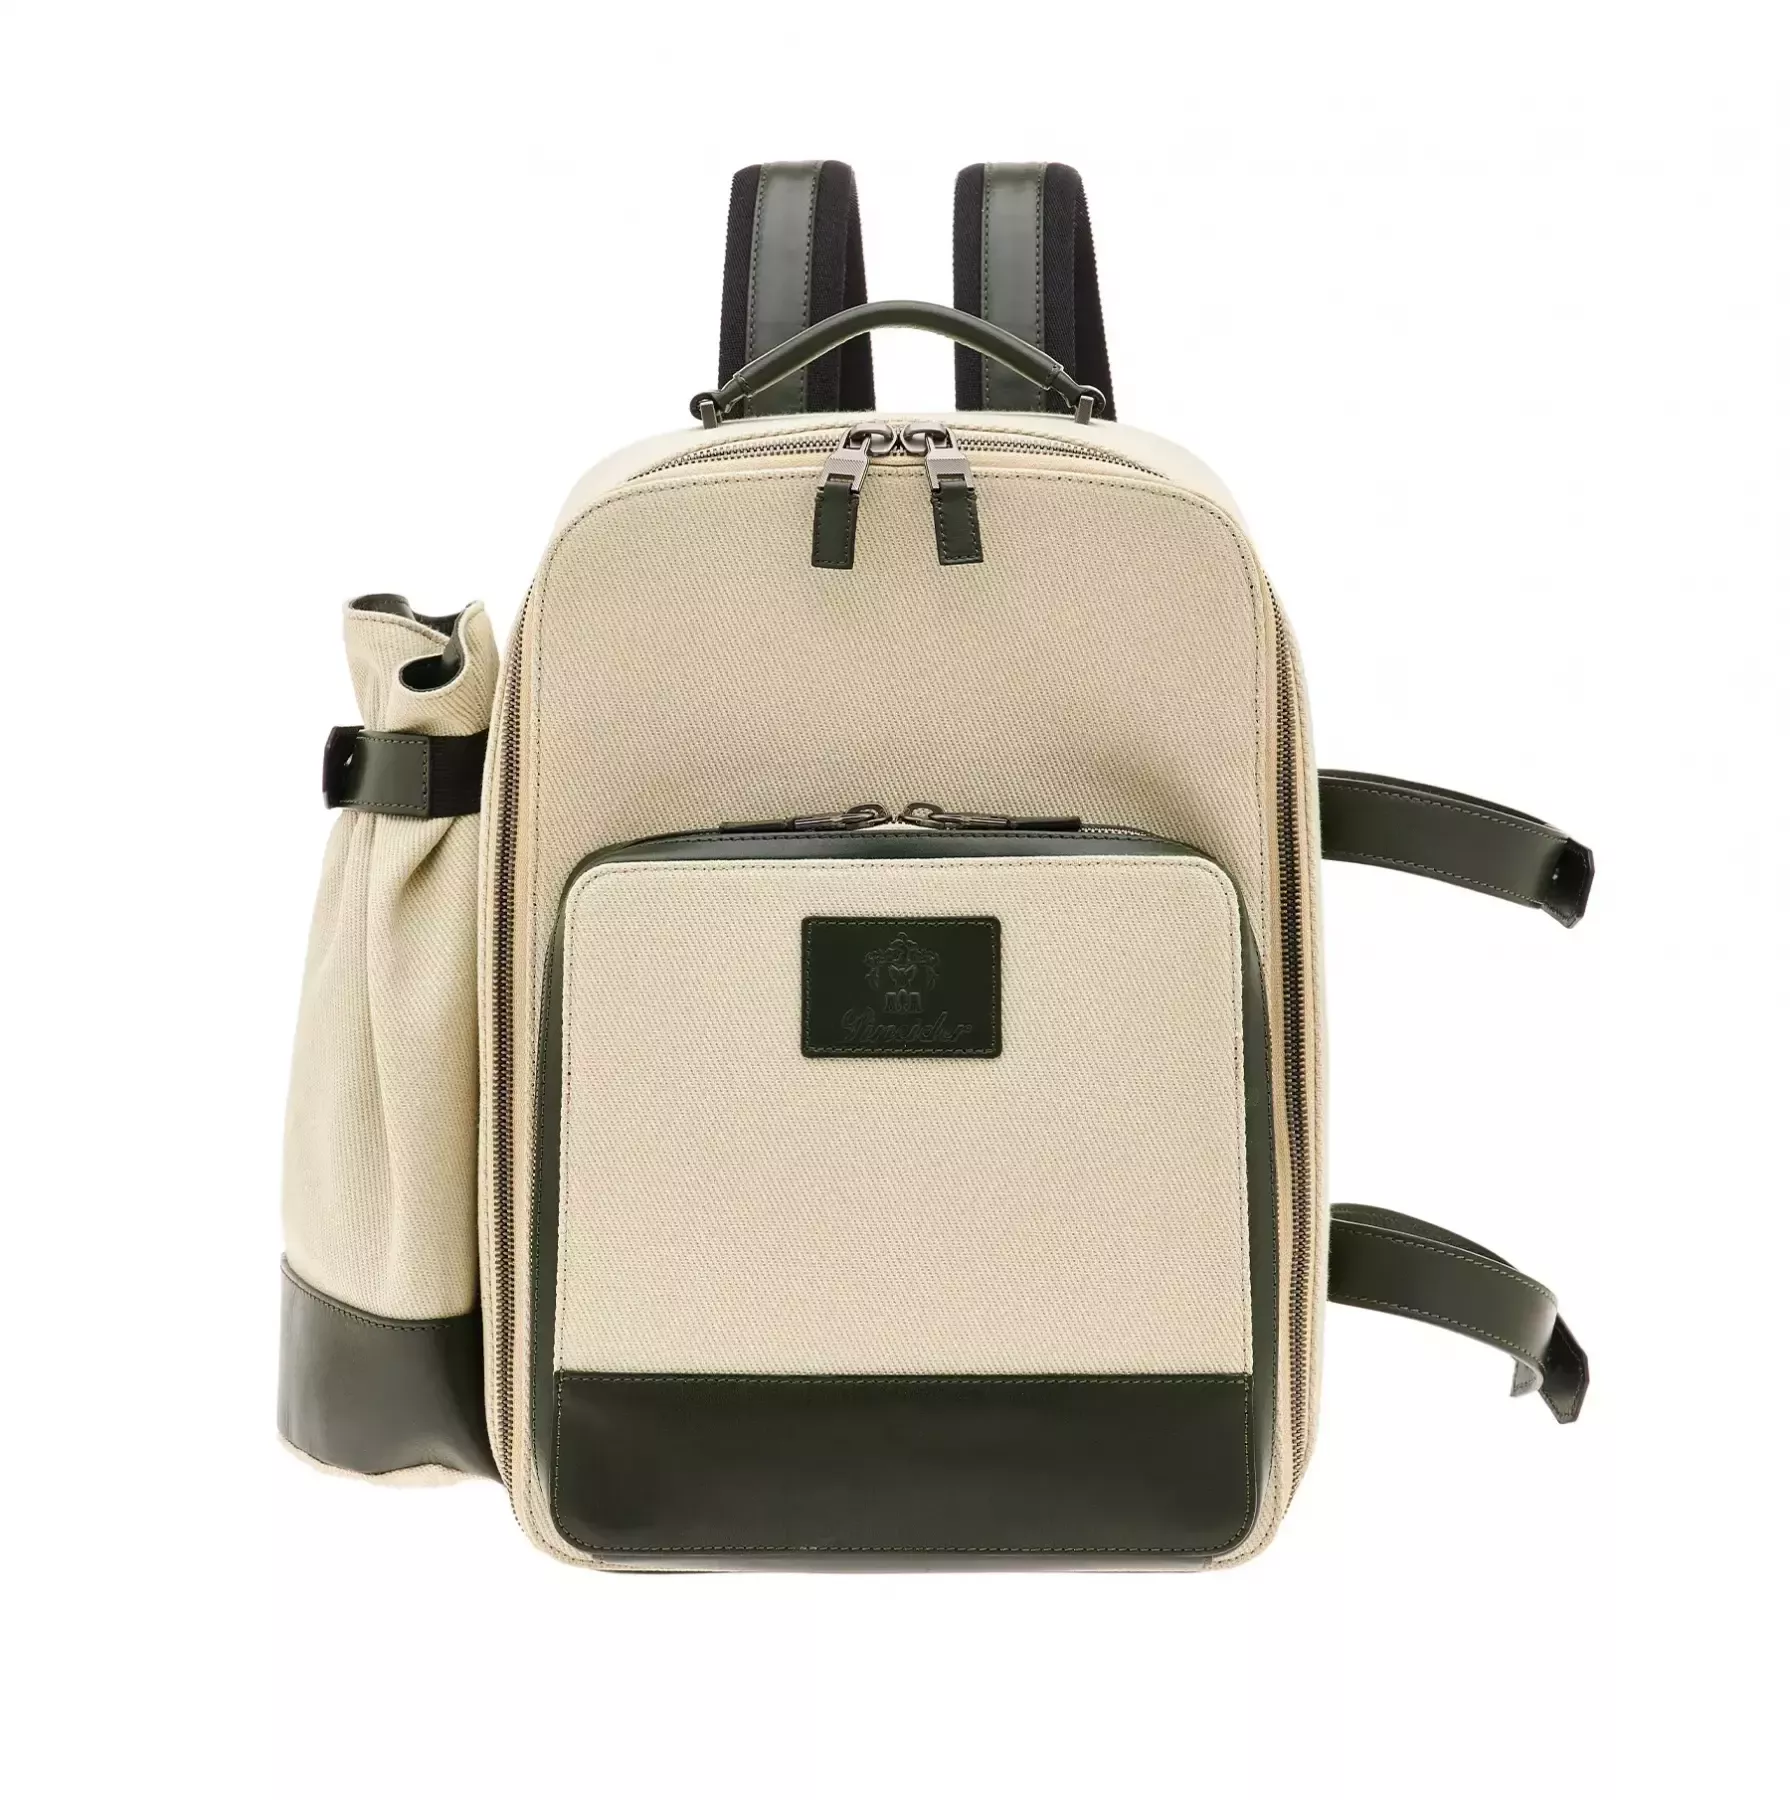 Pic-nic Backpack